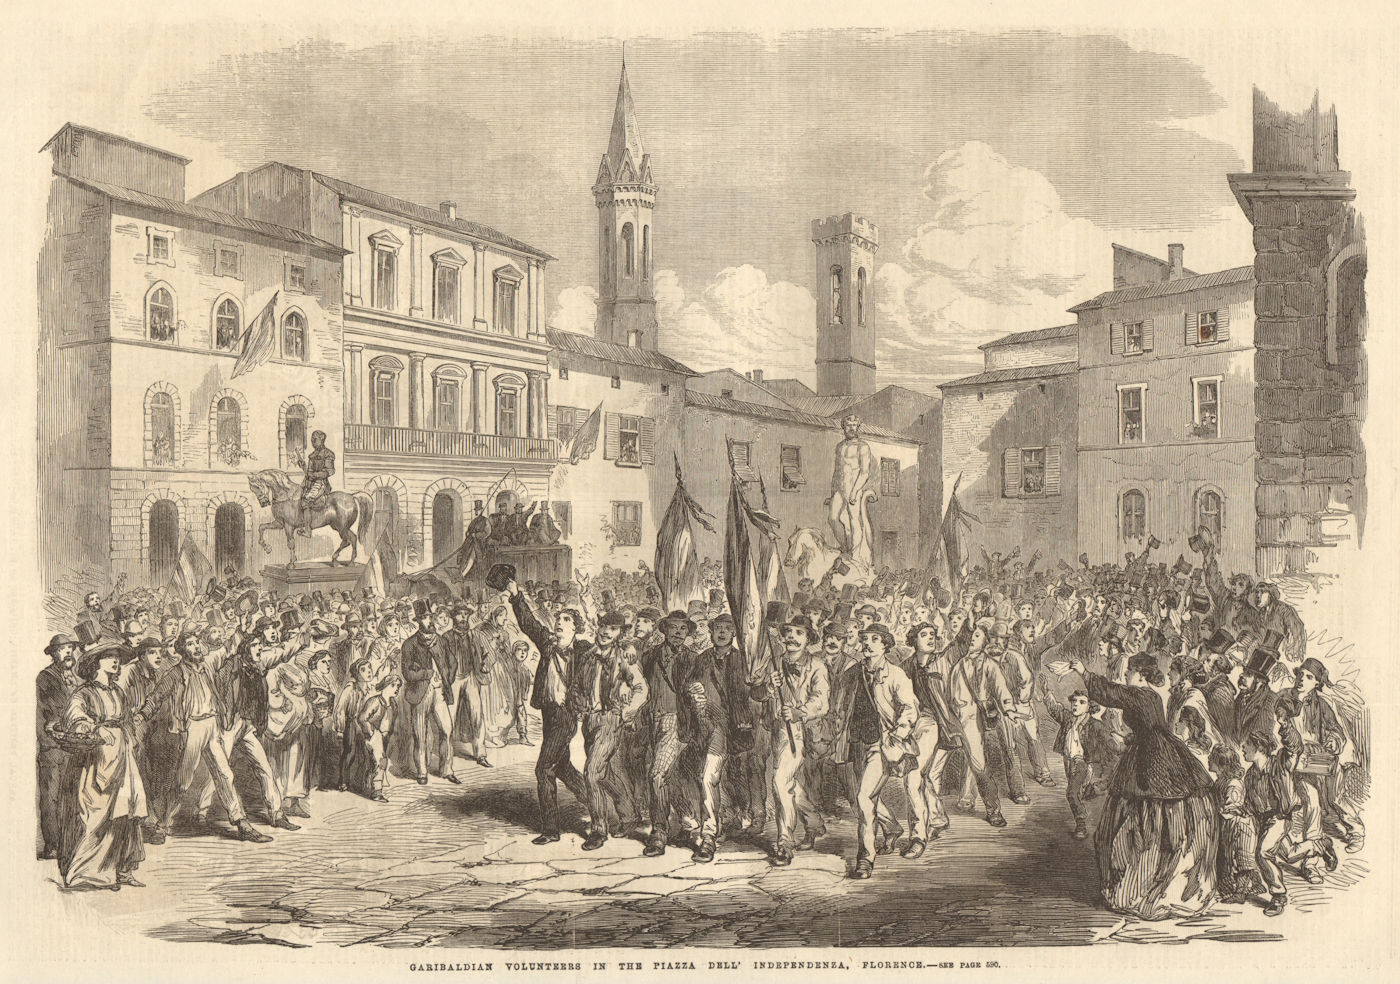 Garibaldian volunteers in the Piazza dell' Independenza, Florence. Italy 1866